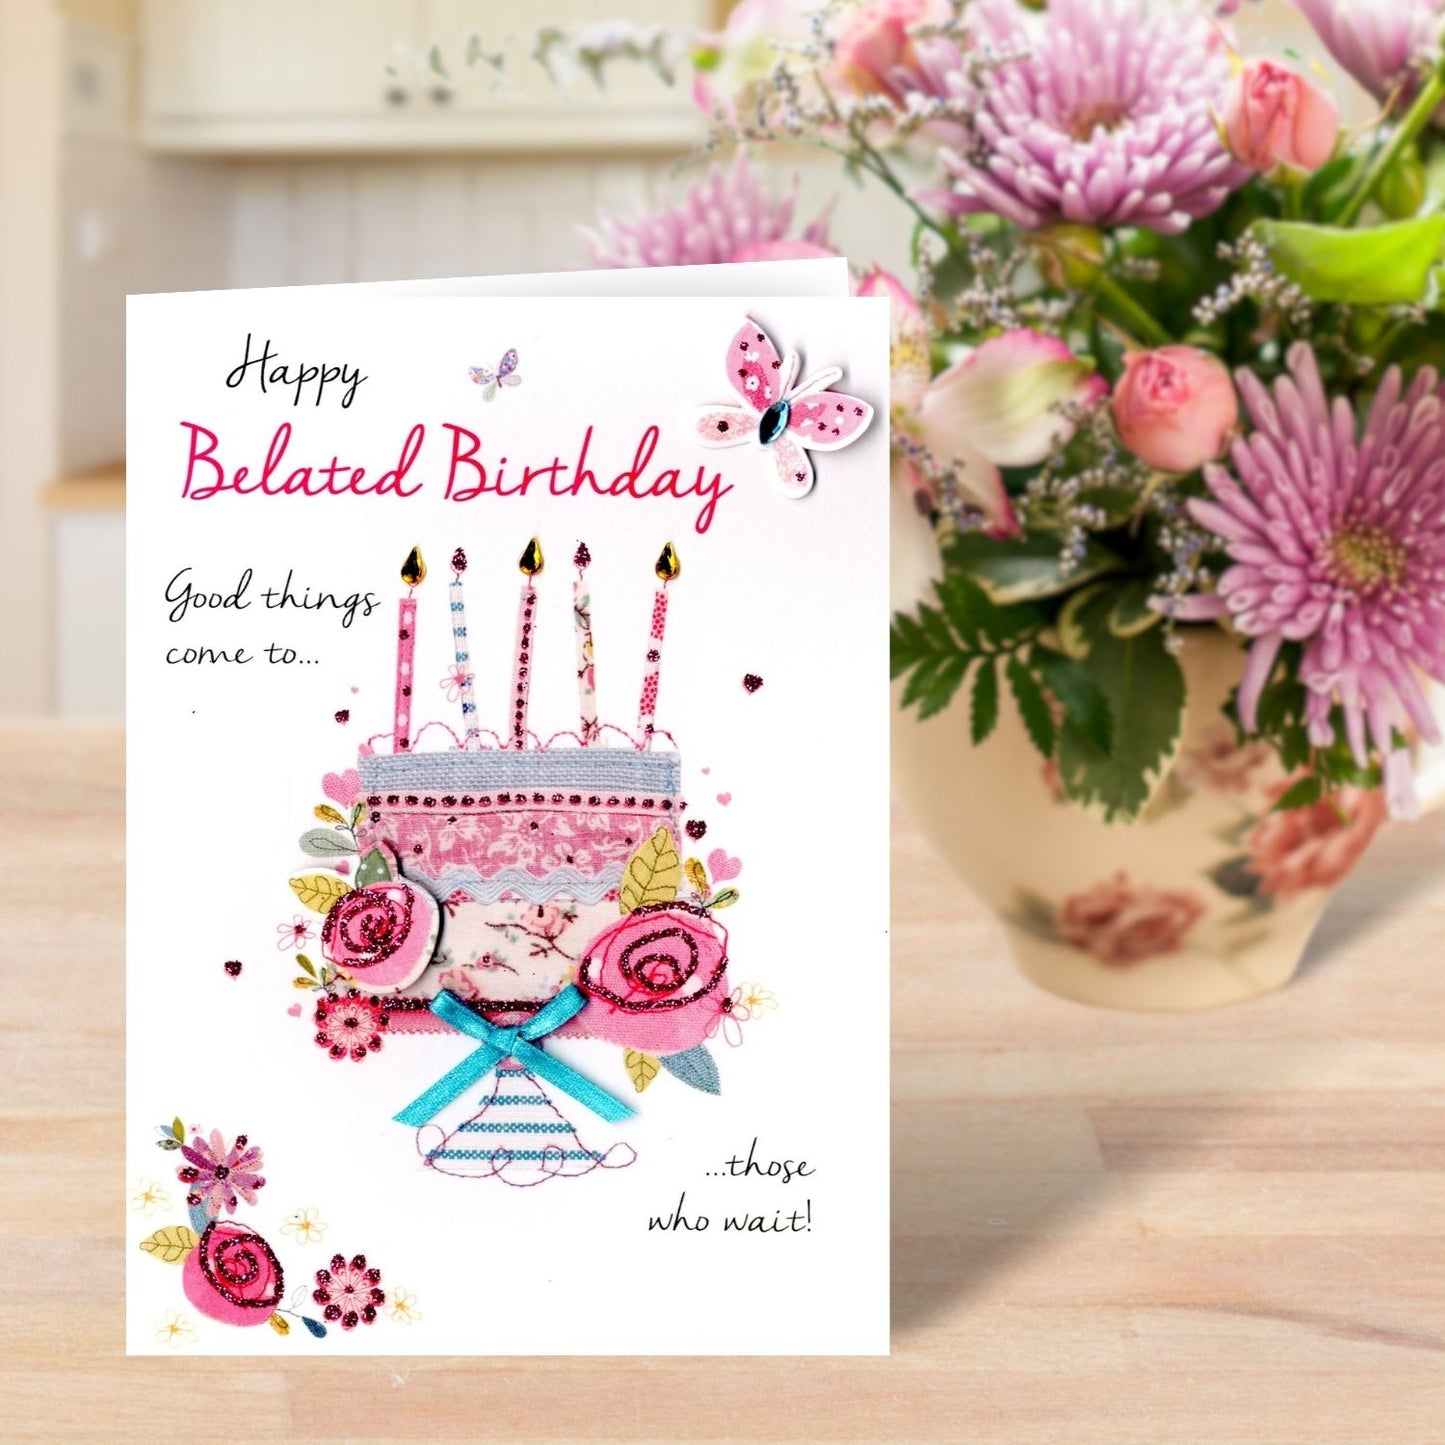 Happy Belated Birthday Greeting Card!